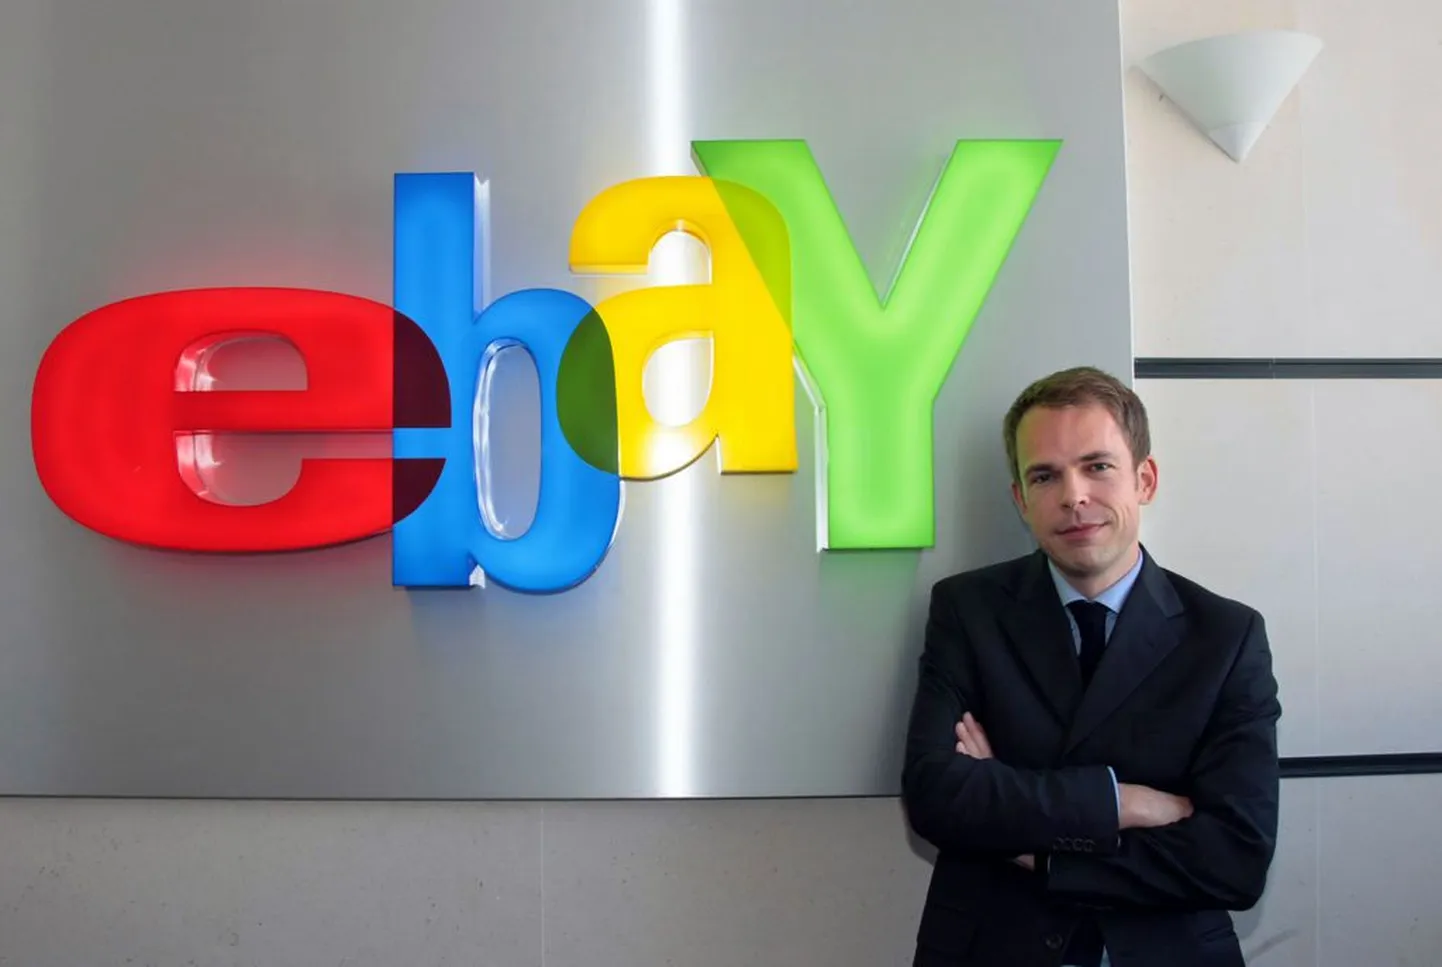 Логотип eBay.